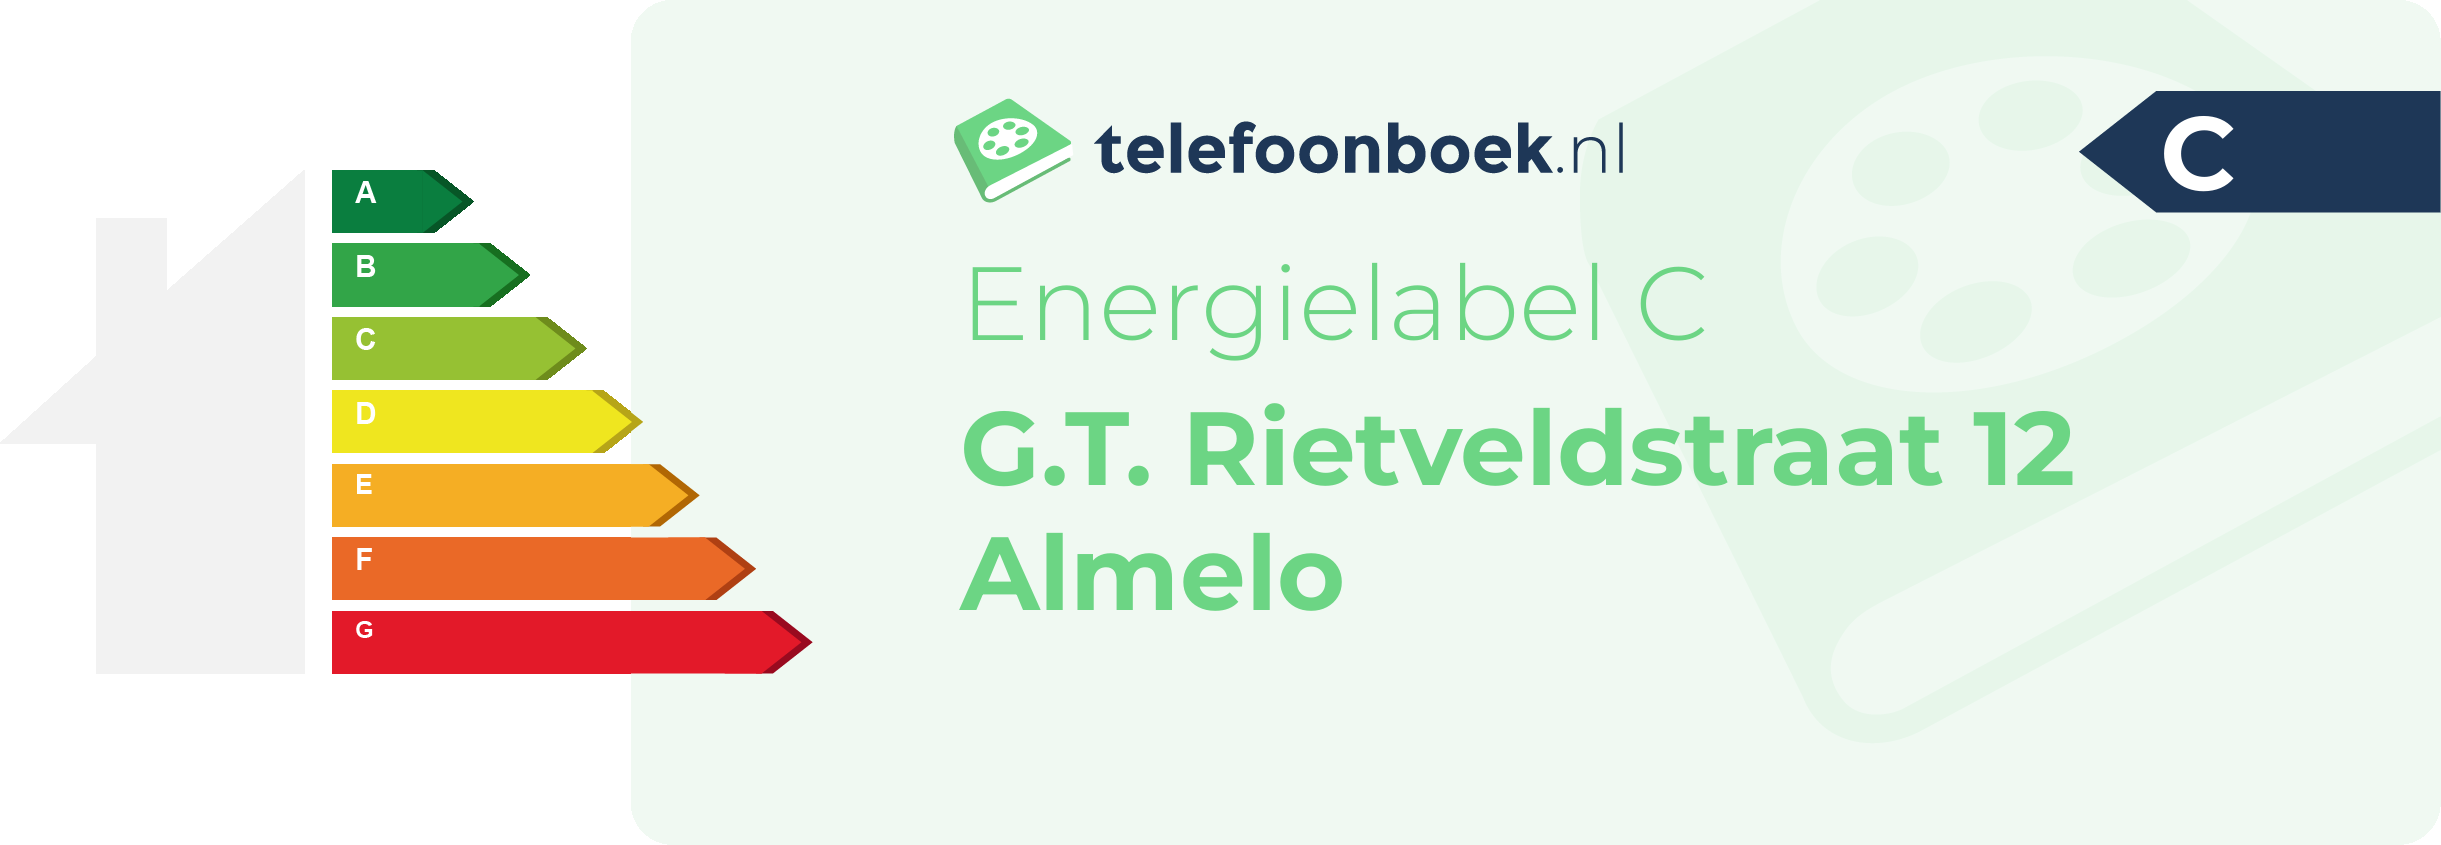 Energielabel G.T. Rietveldstraat 12 Almelo